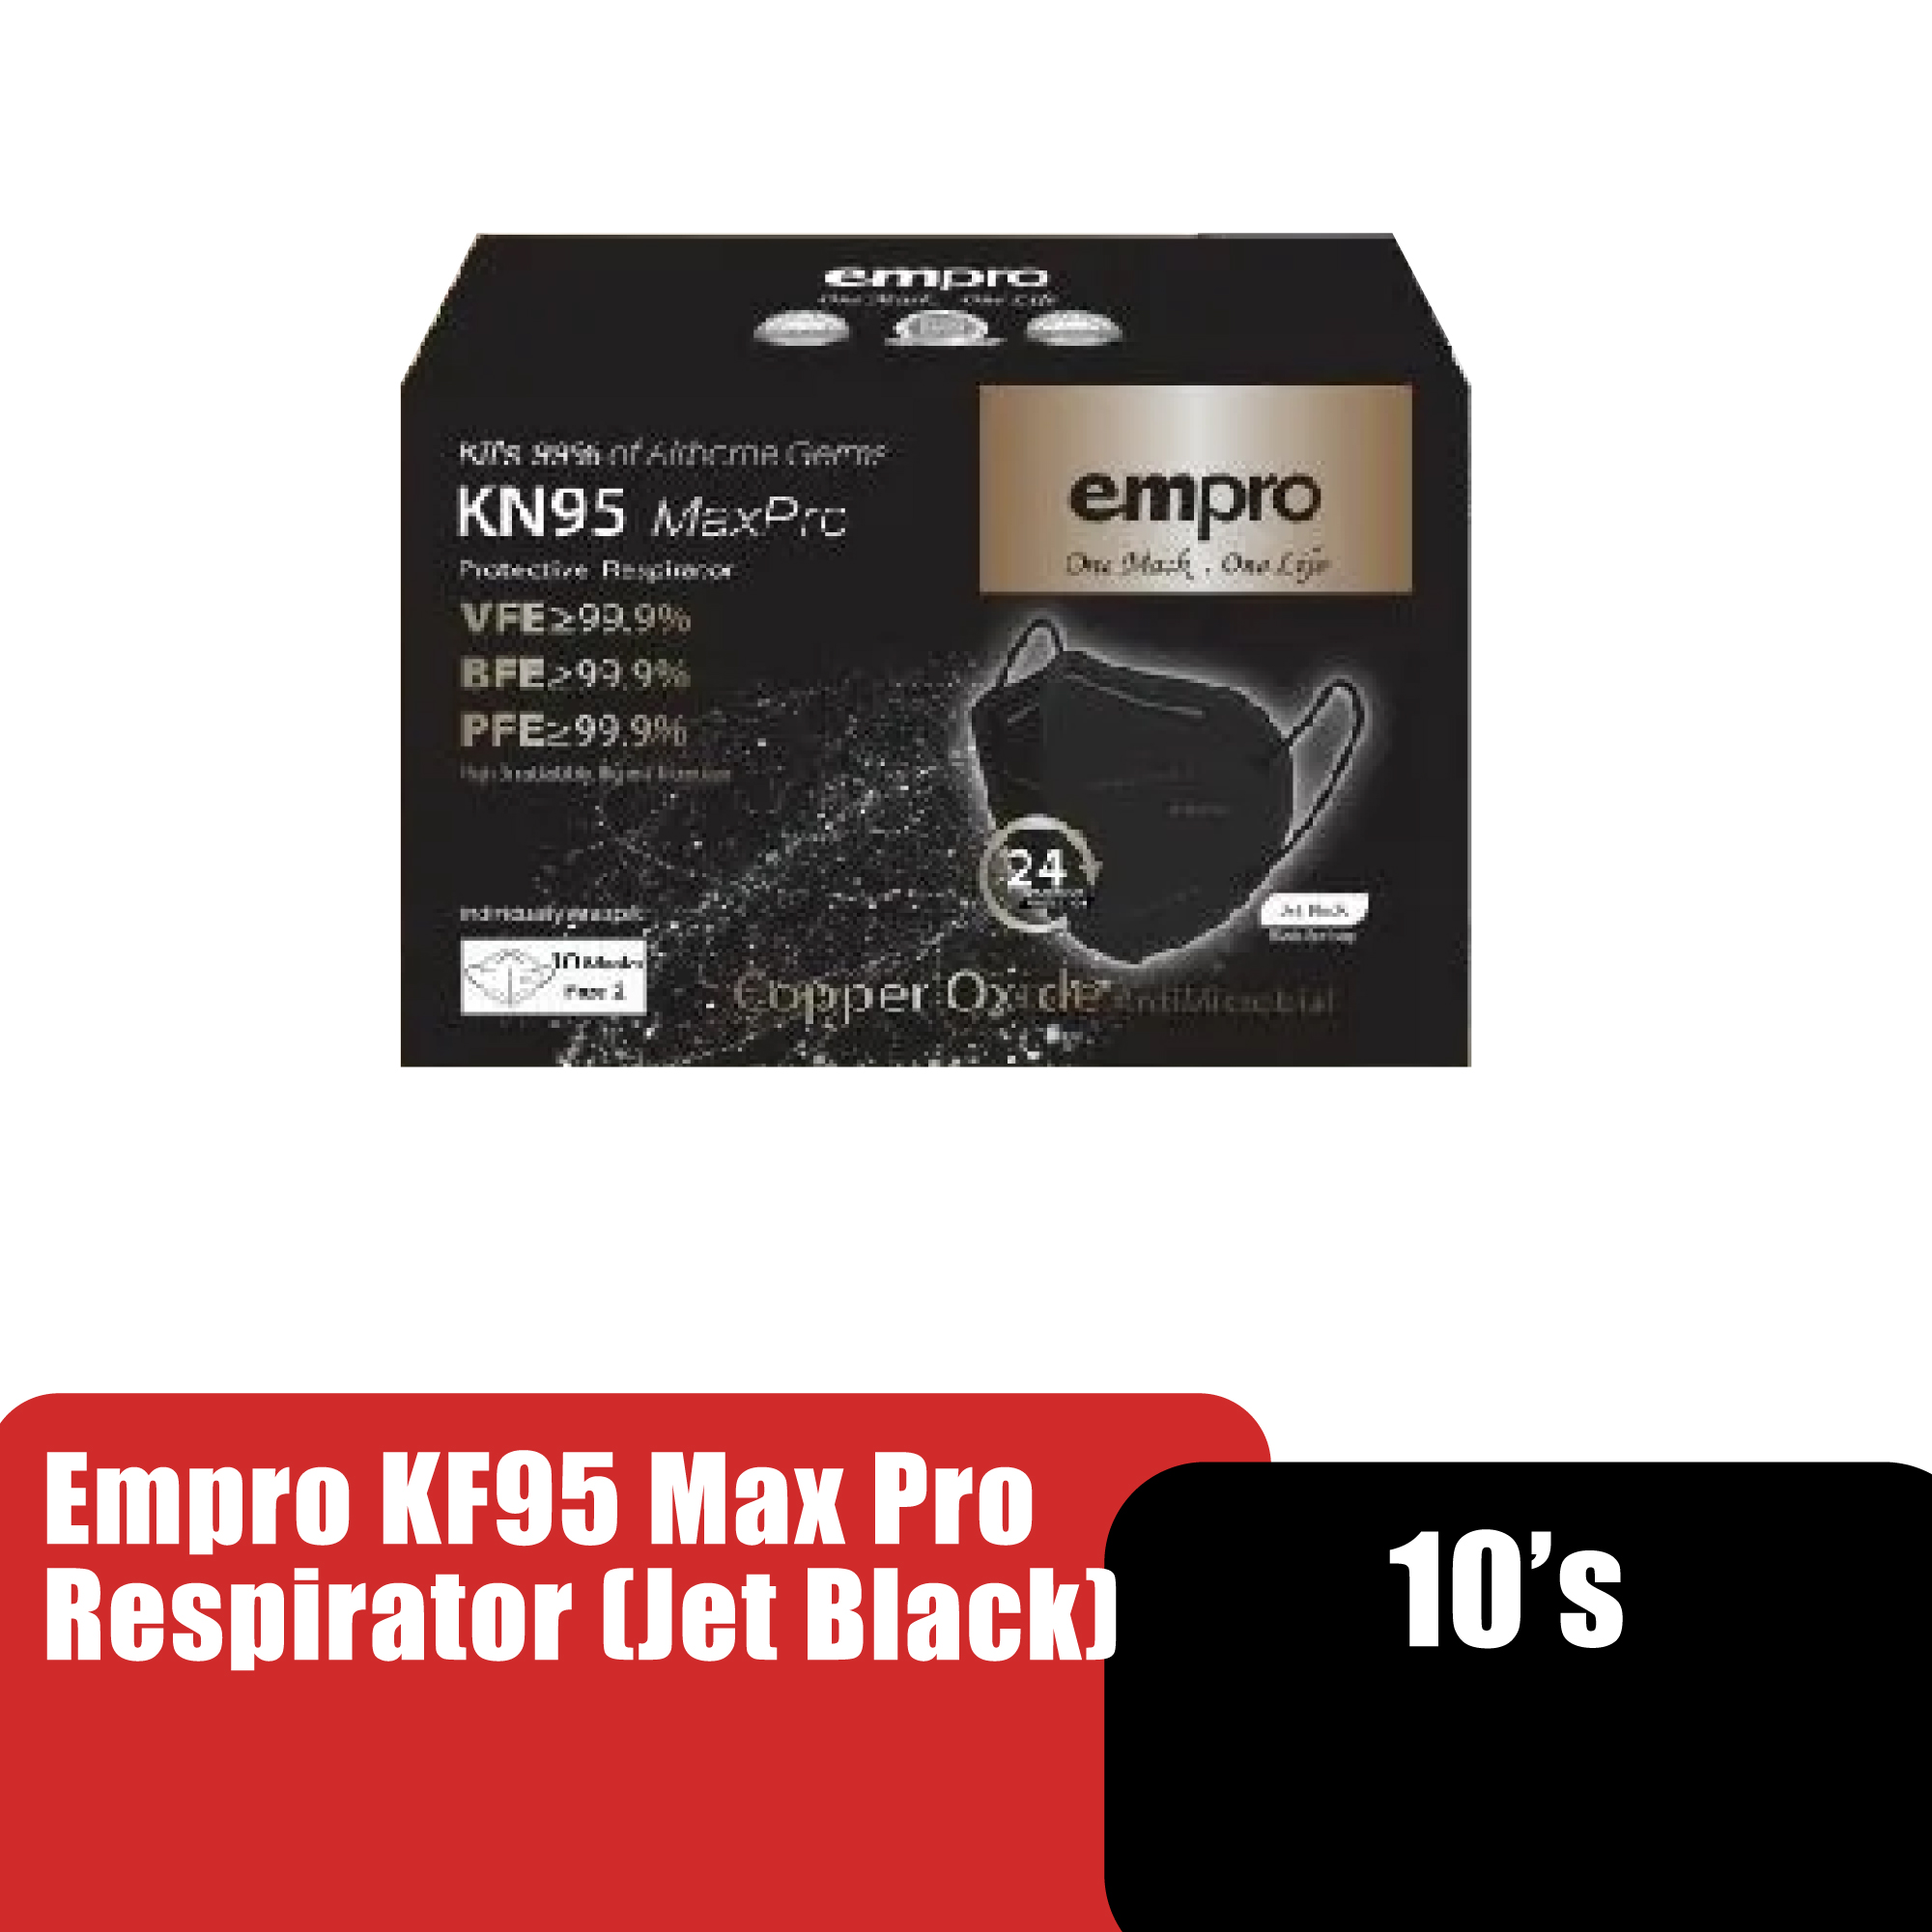 EMPRO KN95 MAX PRO RESPIRATOR COPPER OXIDE ANTIMICROBIAL FACE MASK 10'S - JET BLACK (JA-KN95)